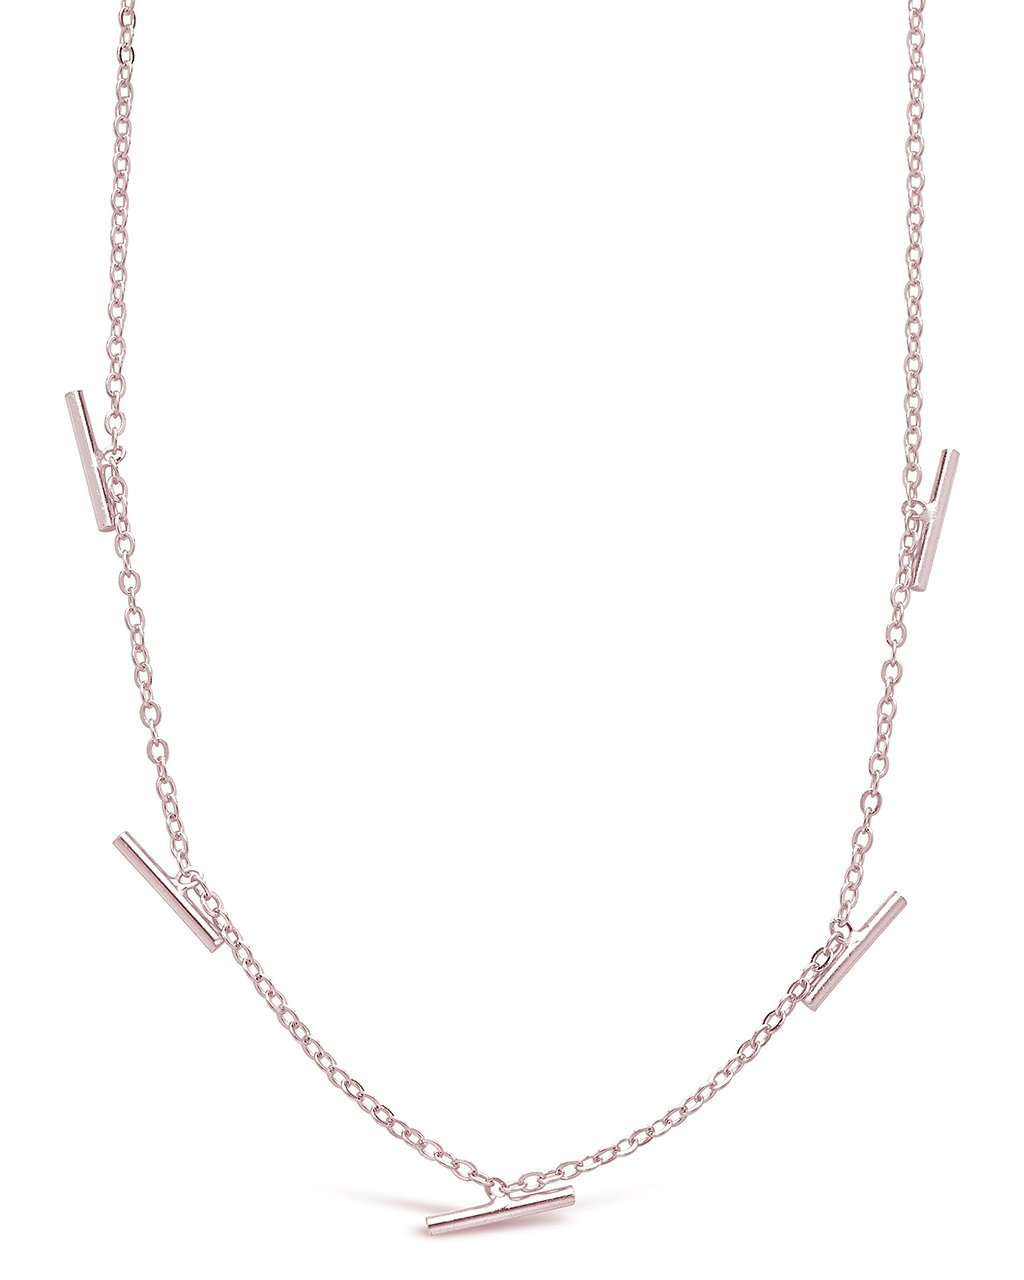 Unusual asymmetric pearl necklace.... - Silver Bliss Designs | Facebook